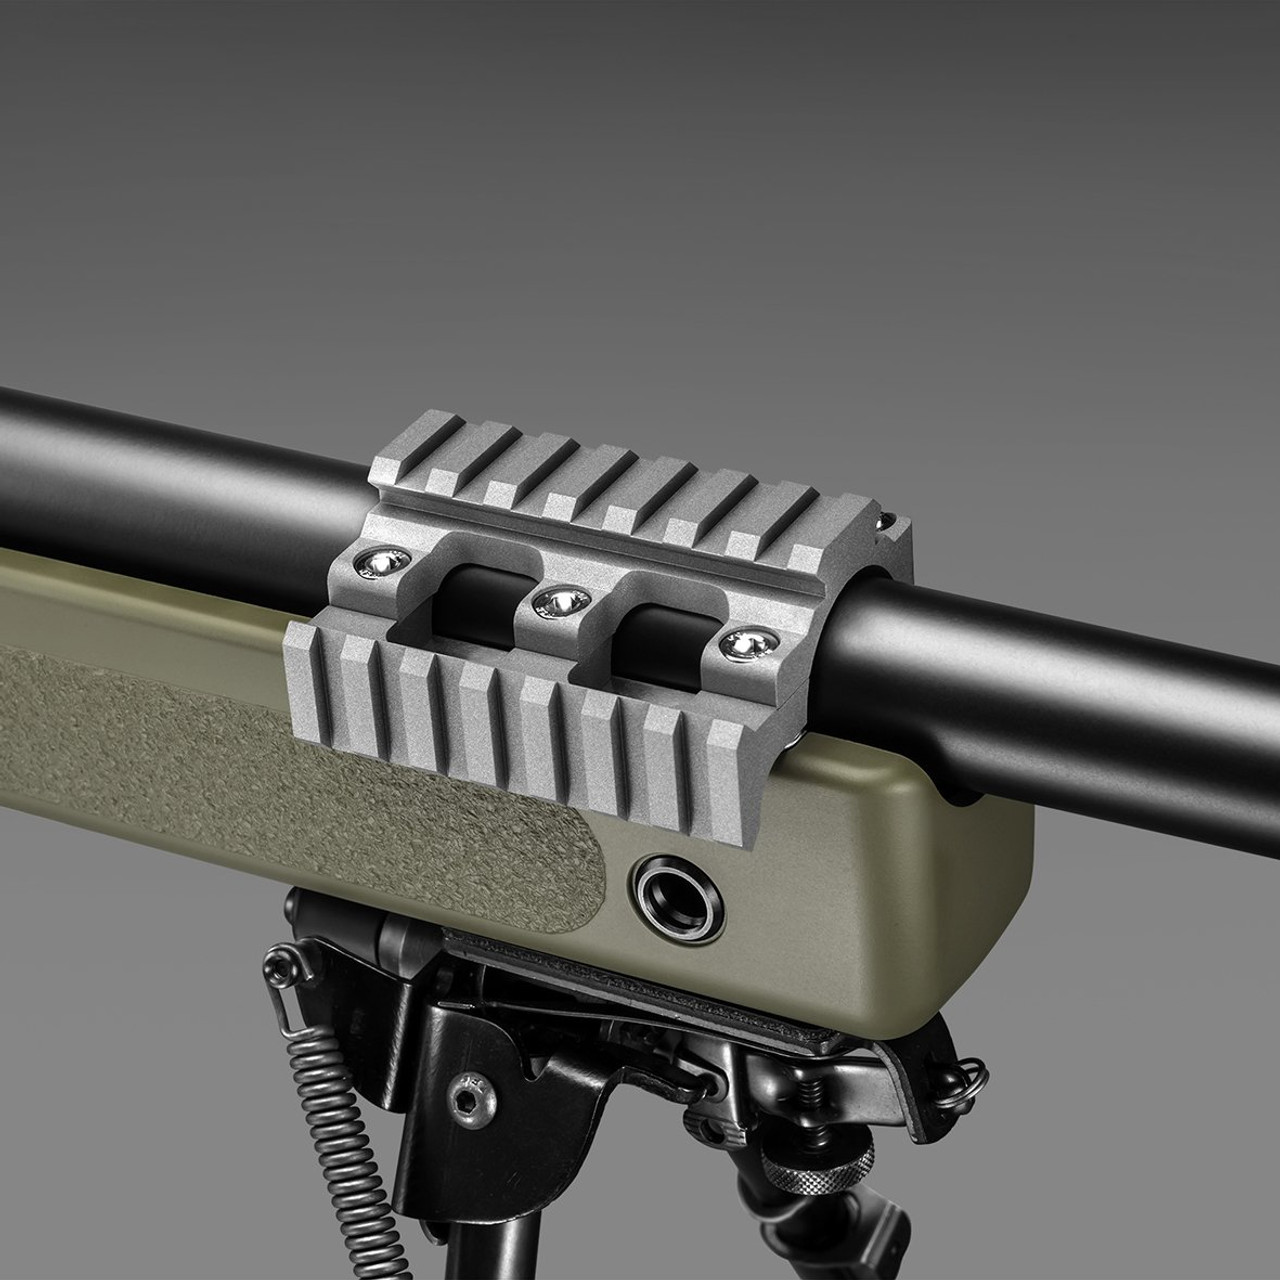 Top of Tokyo Marui M40A5 O.D. color stock bolt action airsoft rifle gun 